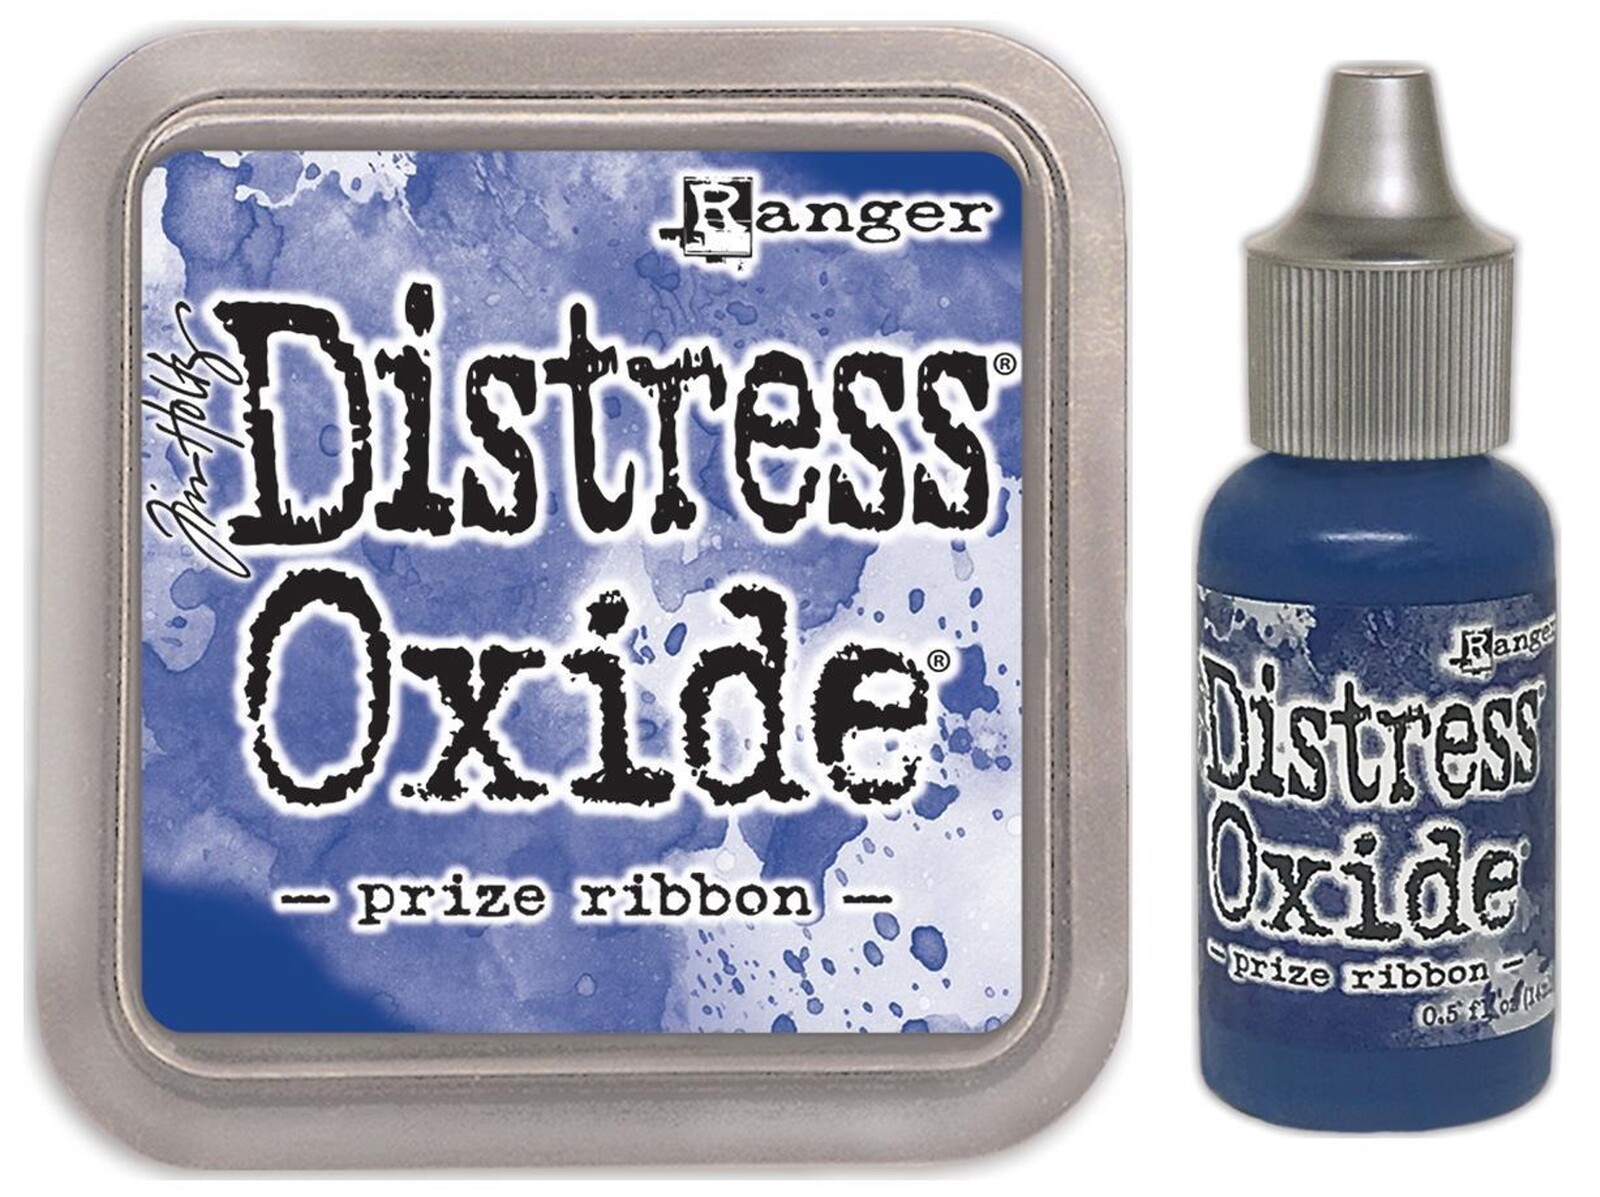 Tim Holtz Distress Oxide Ink Pad + Reinker Prize Ribbon